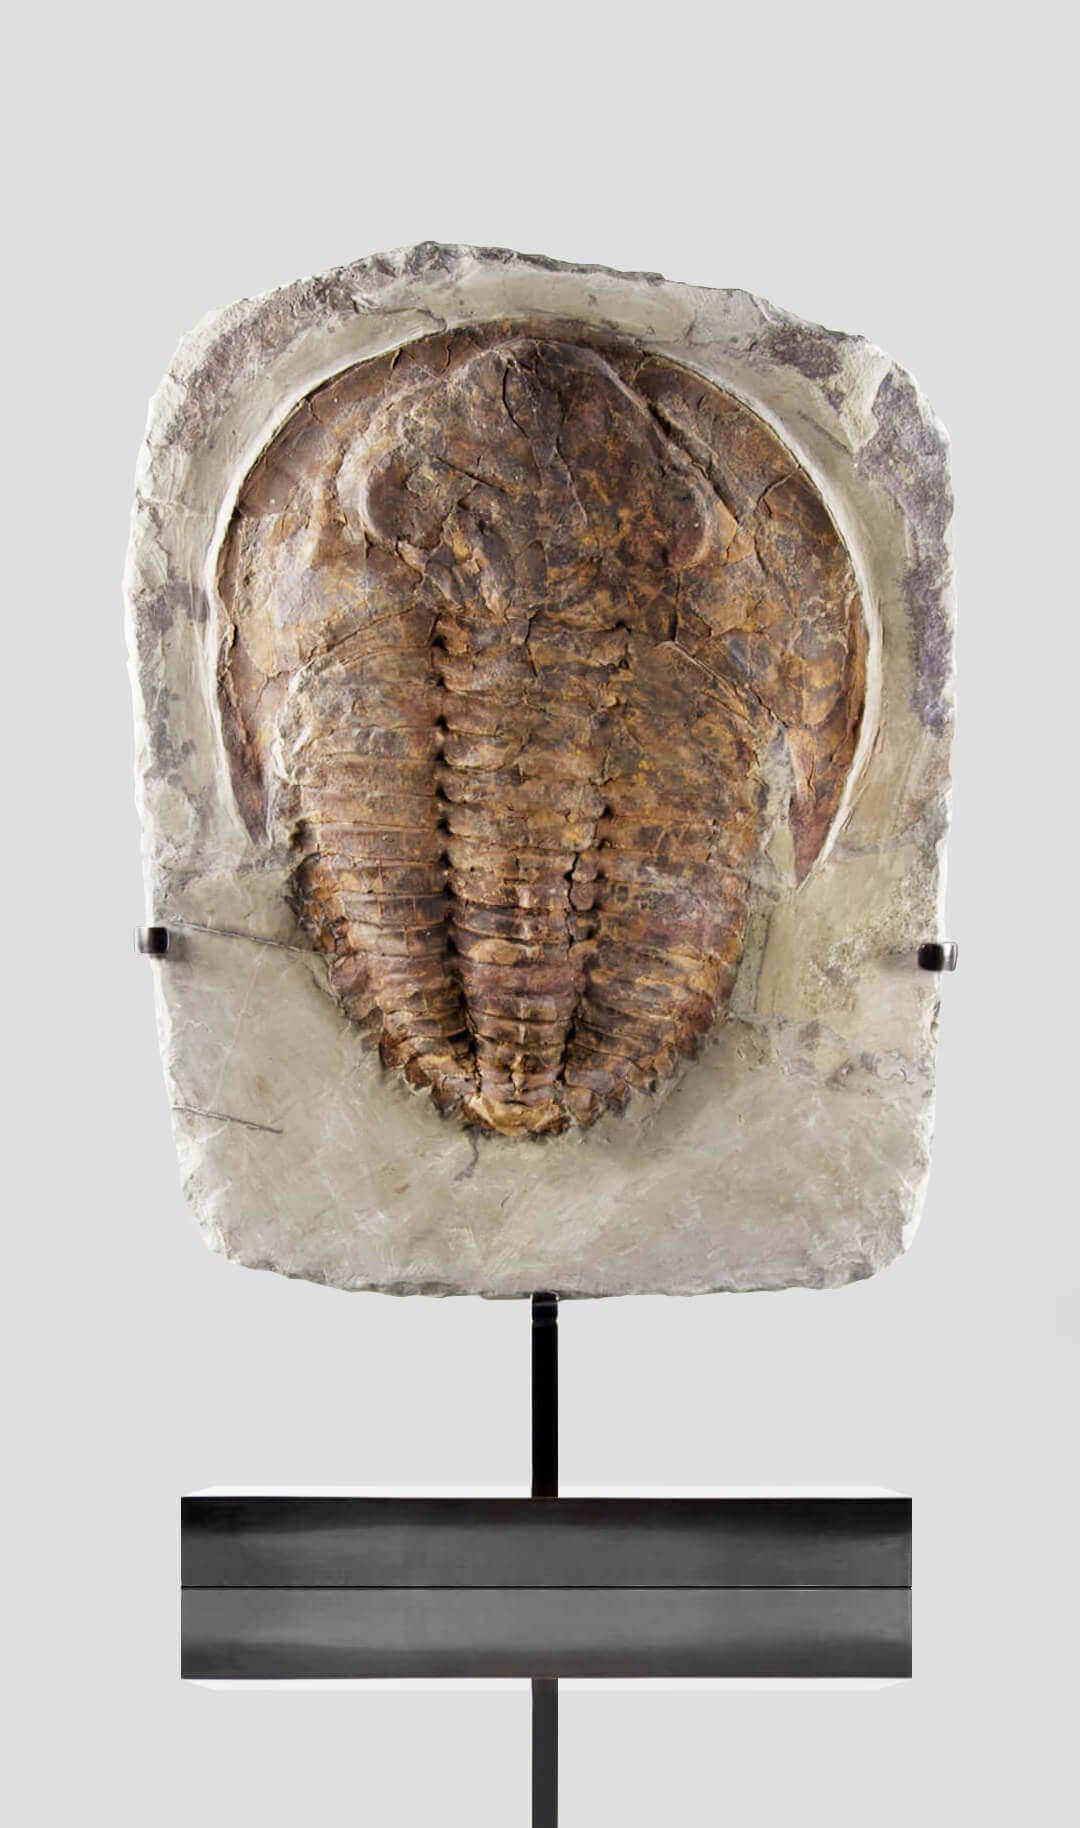 Fossil cambropallas trilobite for sale on a bronze stand 134